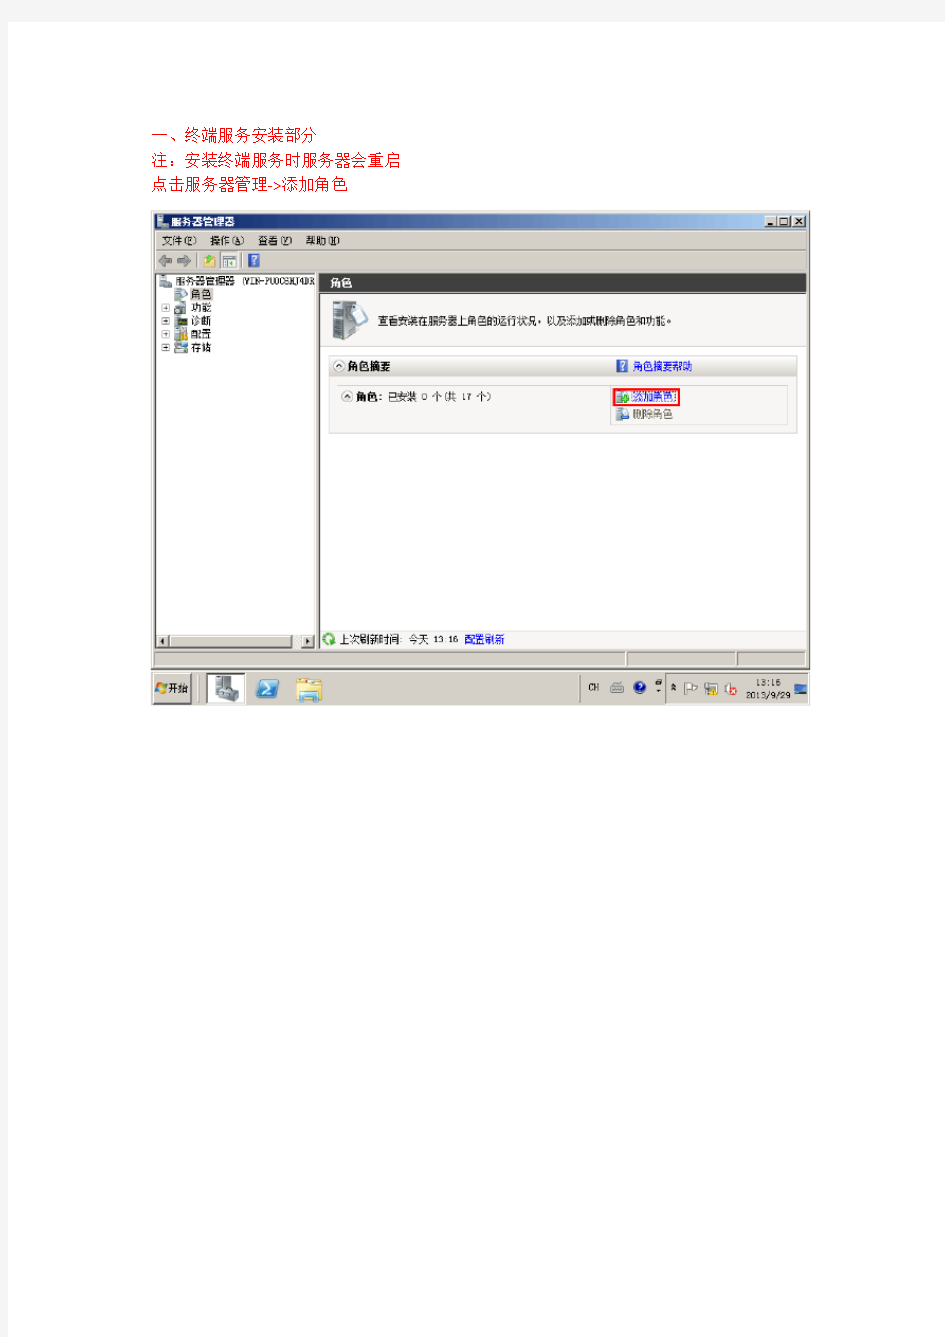 Windowos Server 2008 R2 远程桌面终端授权